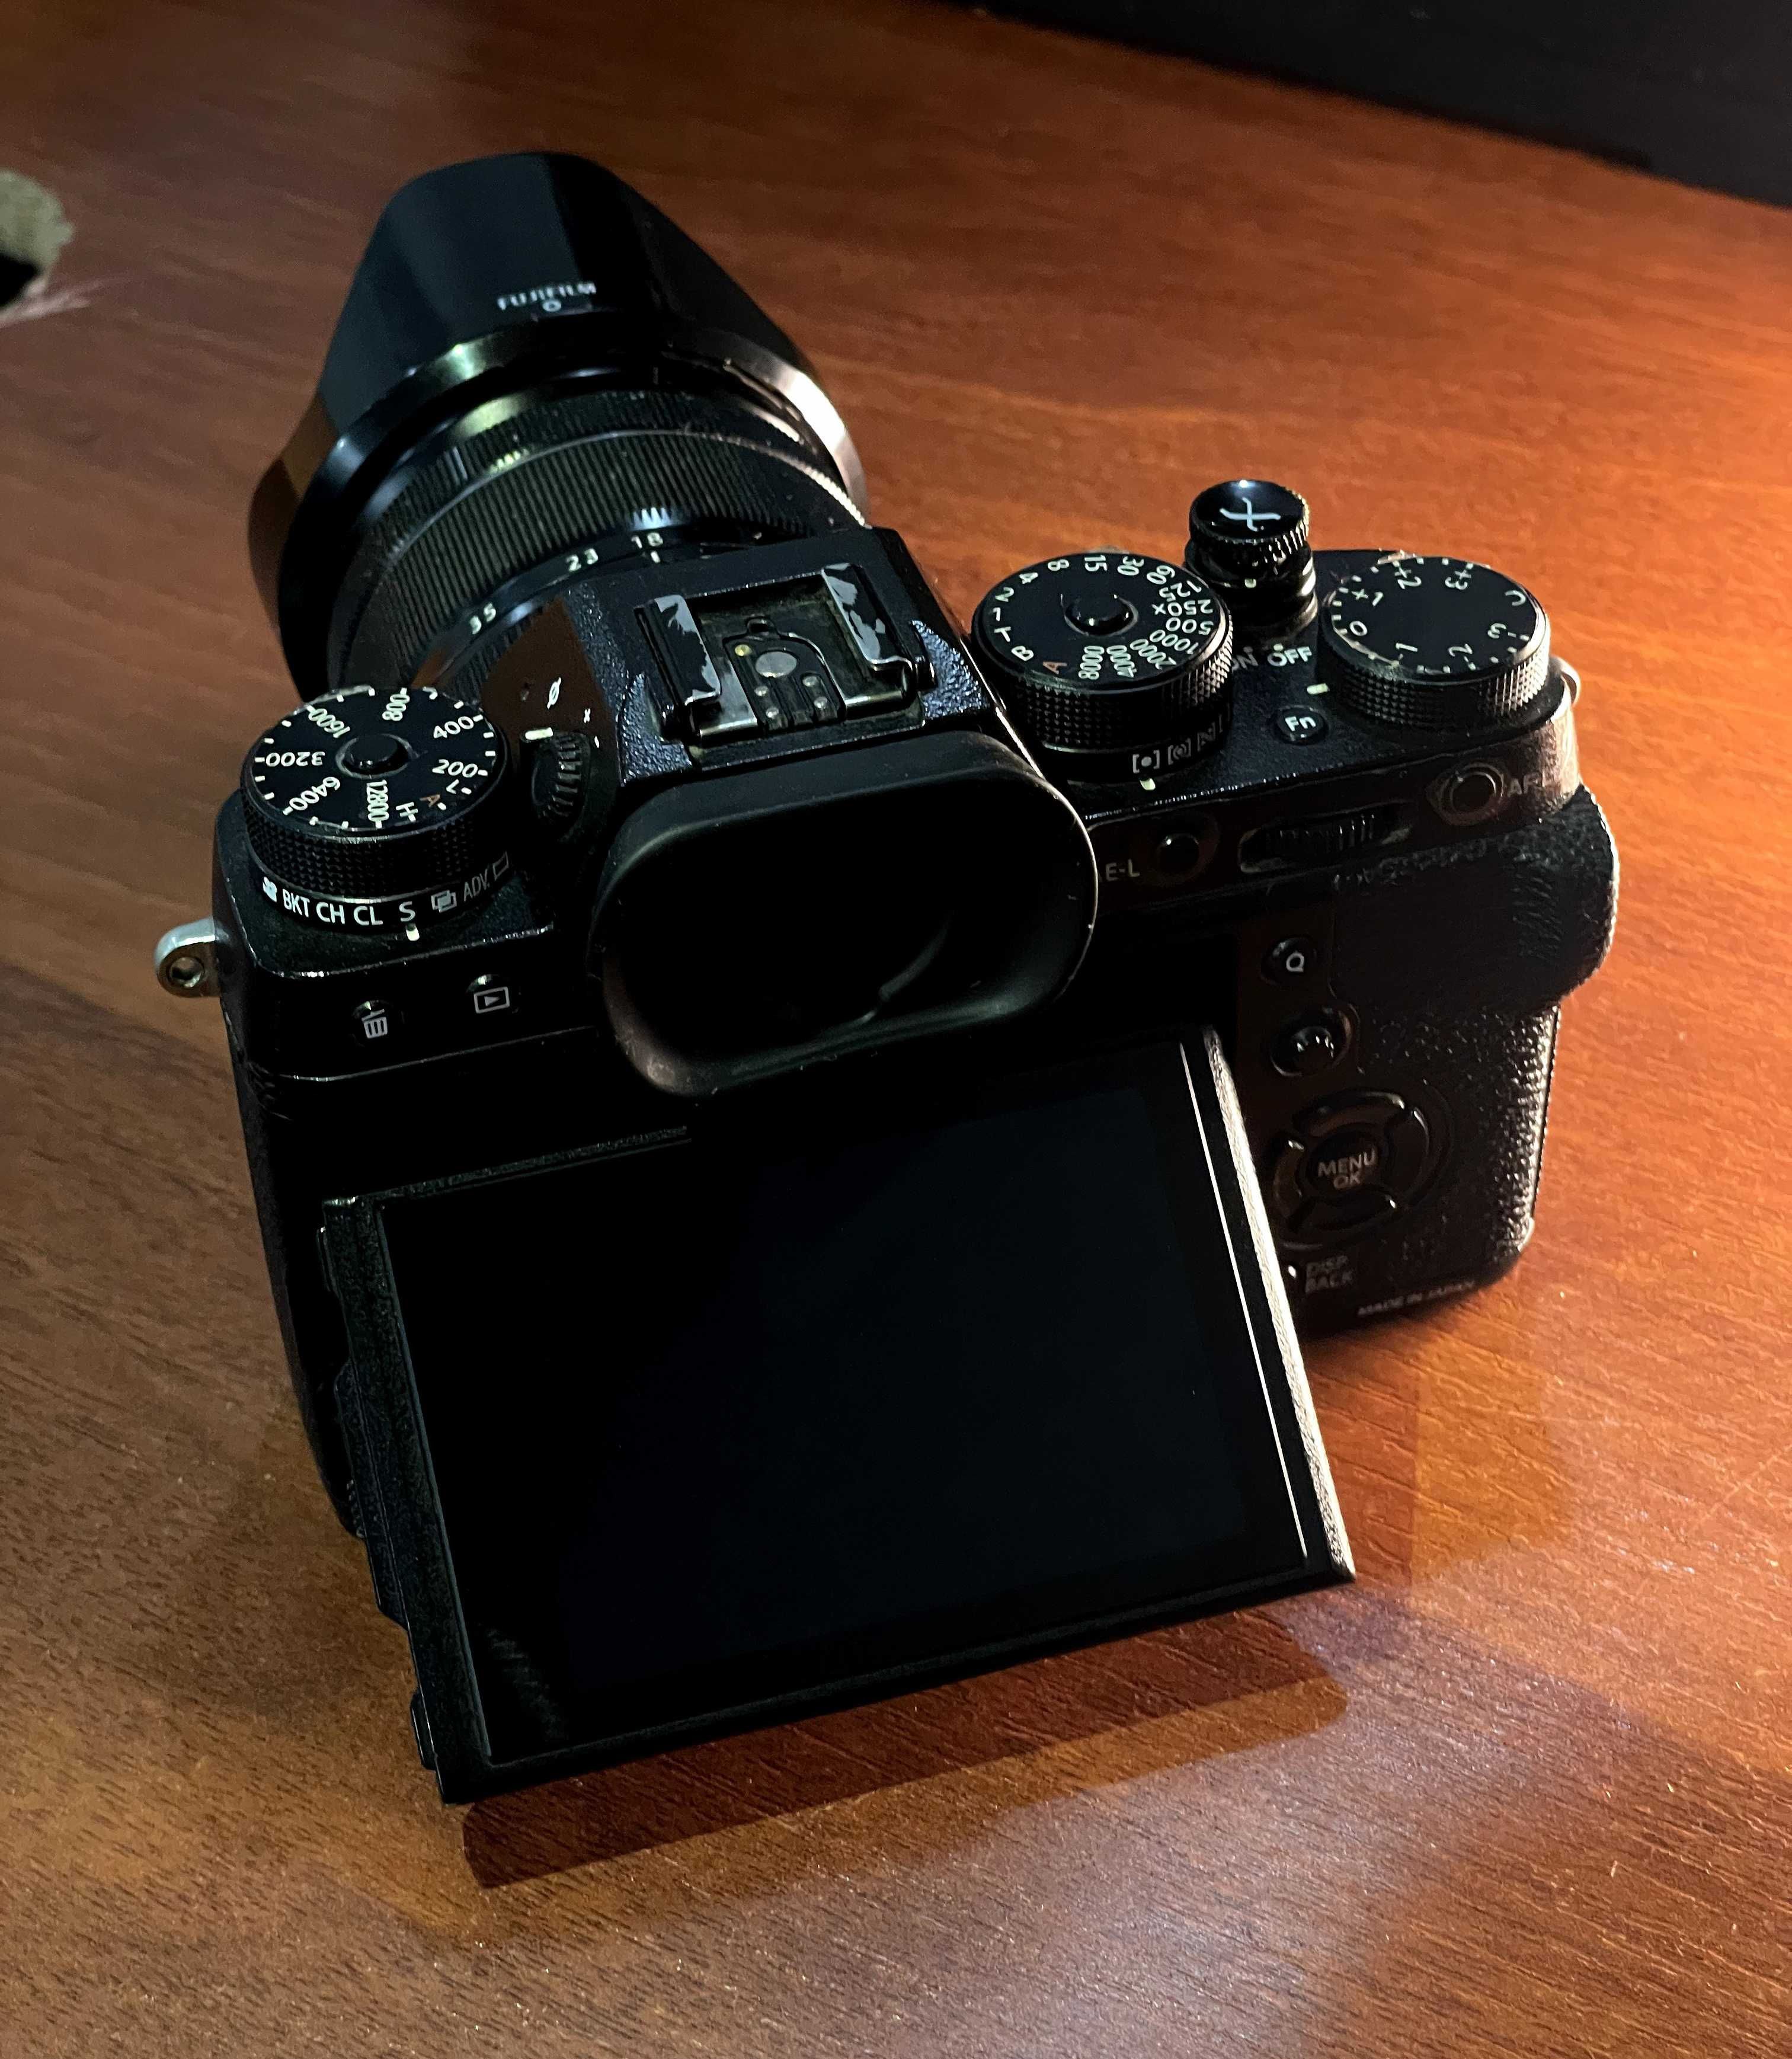 Фотоаппарат Fujifilm X-T2